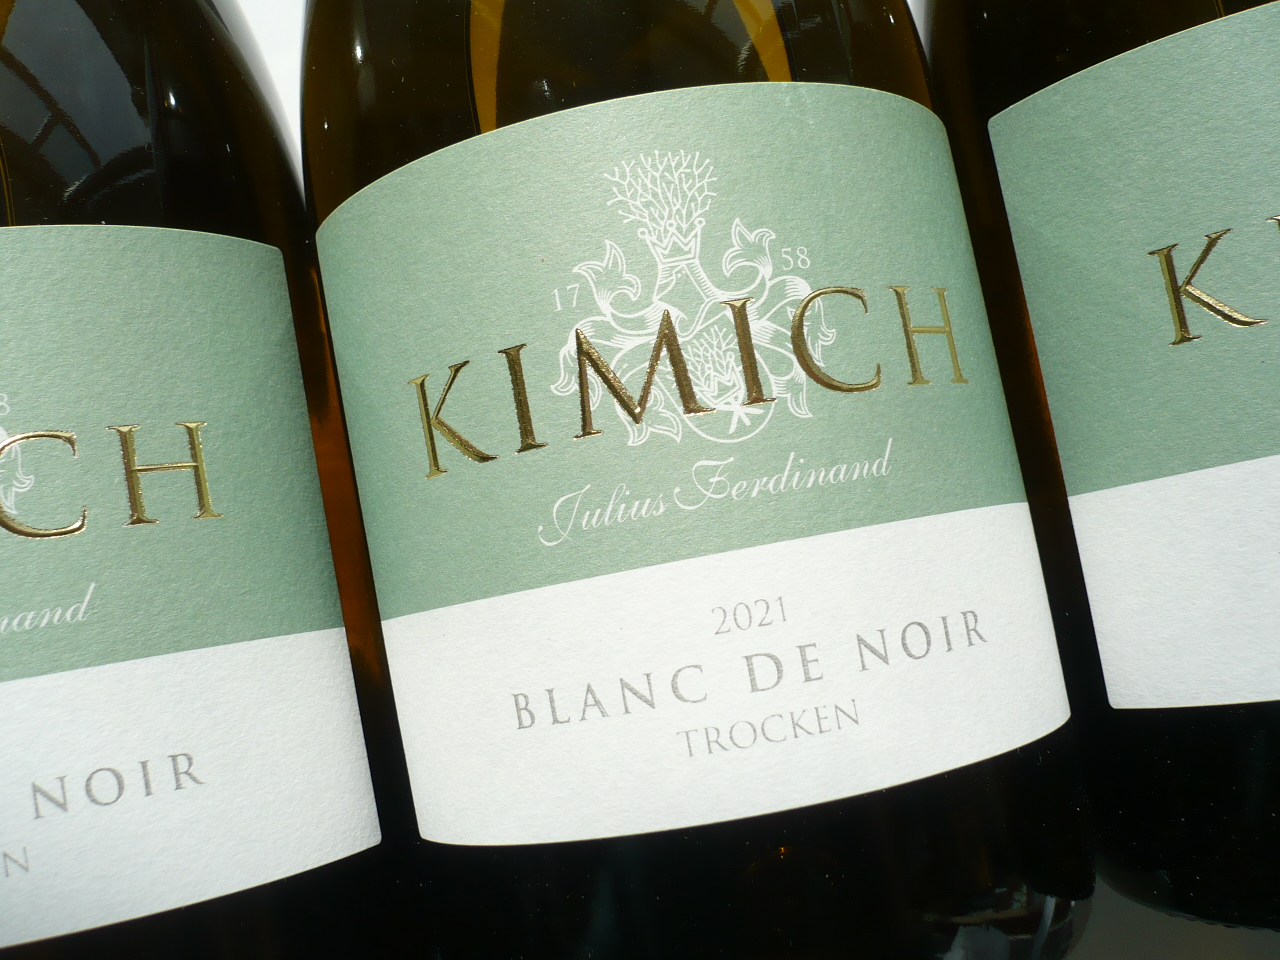 2021er BLANC DE NOIR Qba trocken, Weingut Kimich, Pfalz -0,75l- –  Weinhandel im Fedelhören